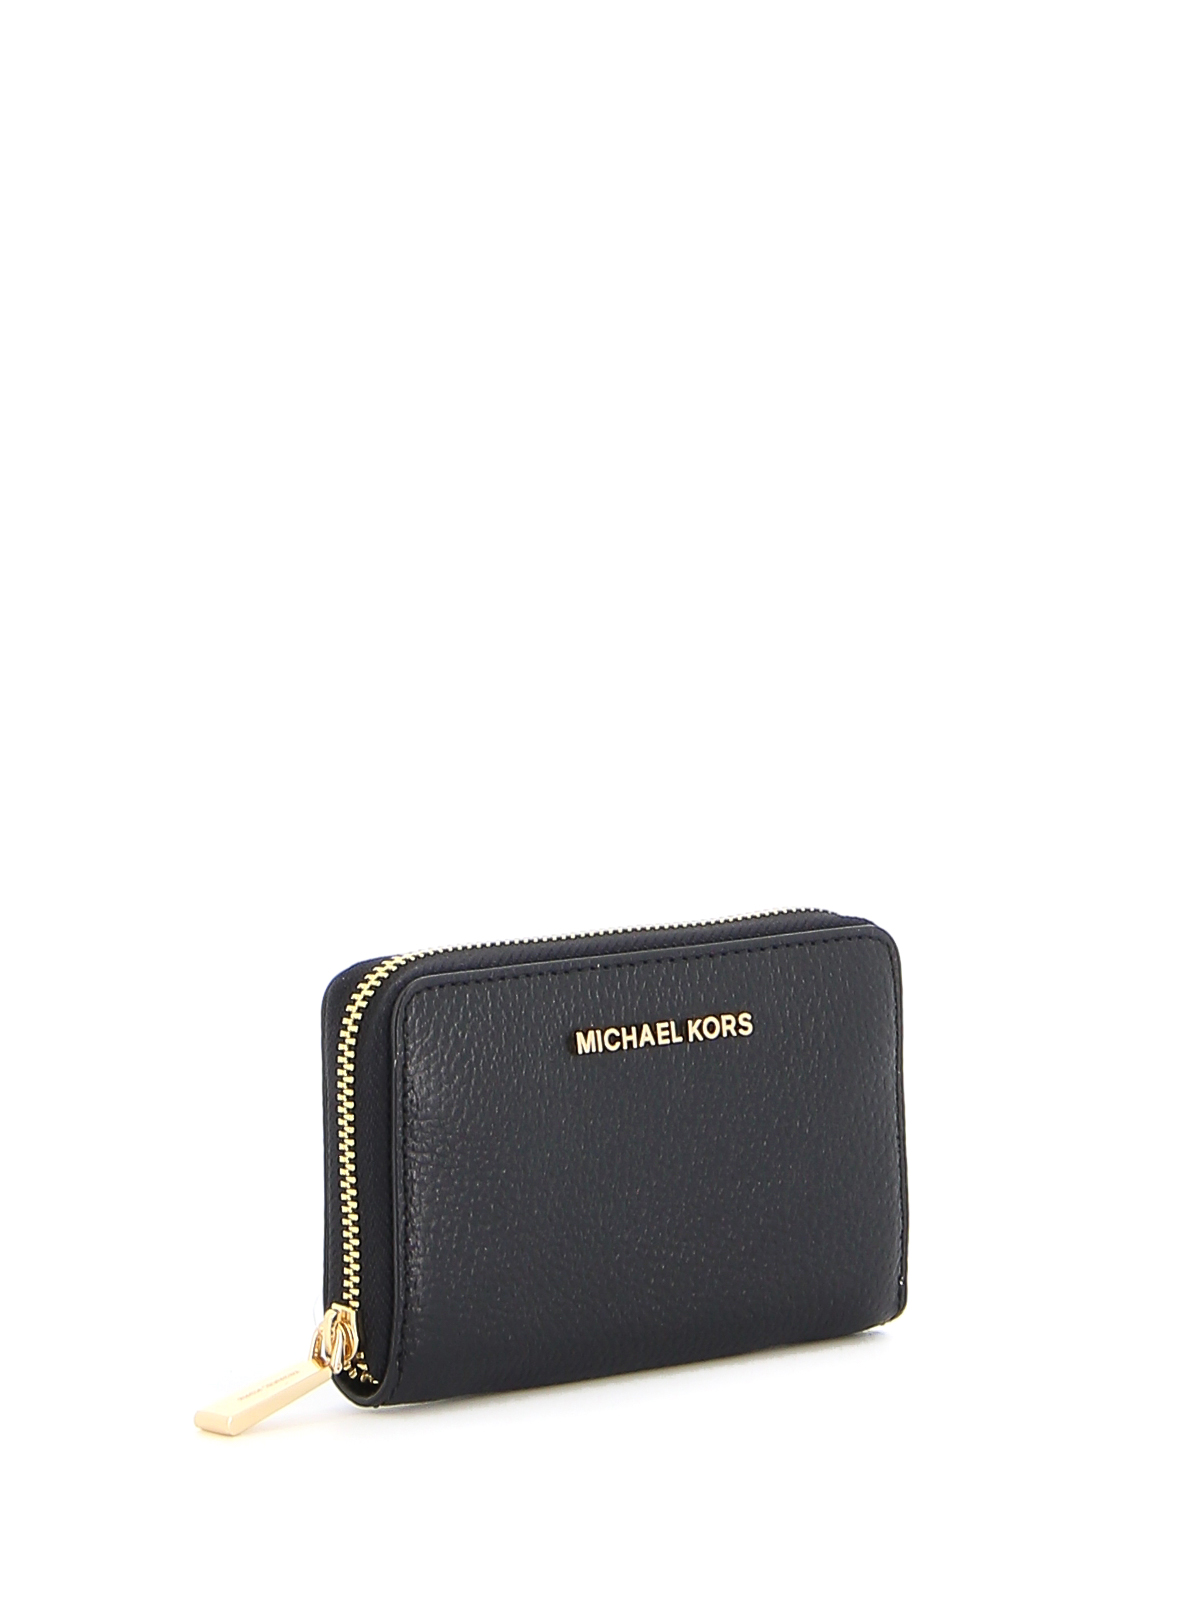 Wallets & purses Michael Kors - Jet Set small wallet - 34H9GJ6D0L001